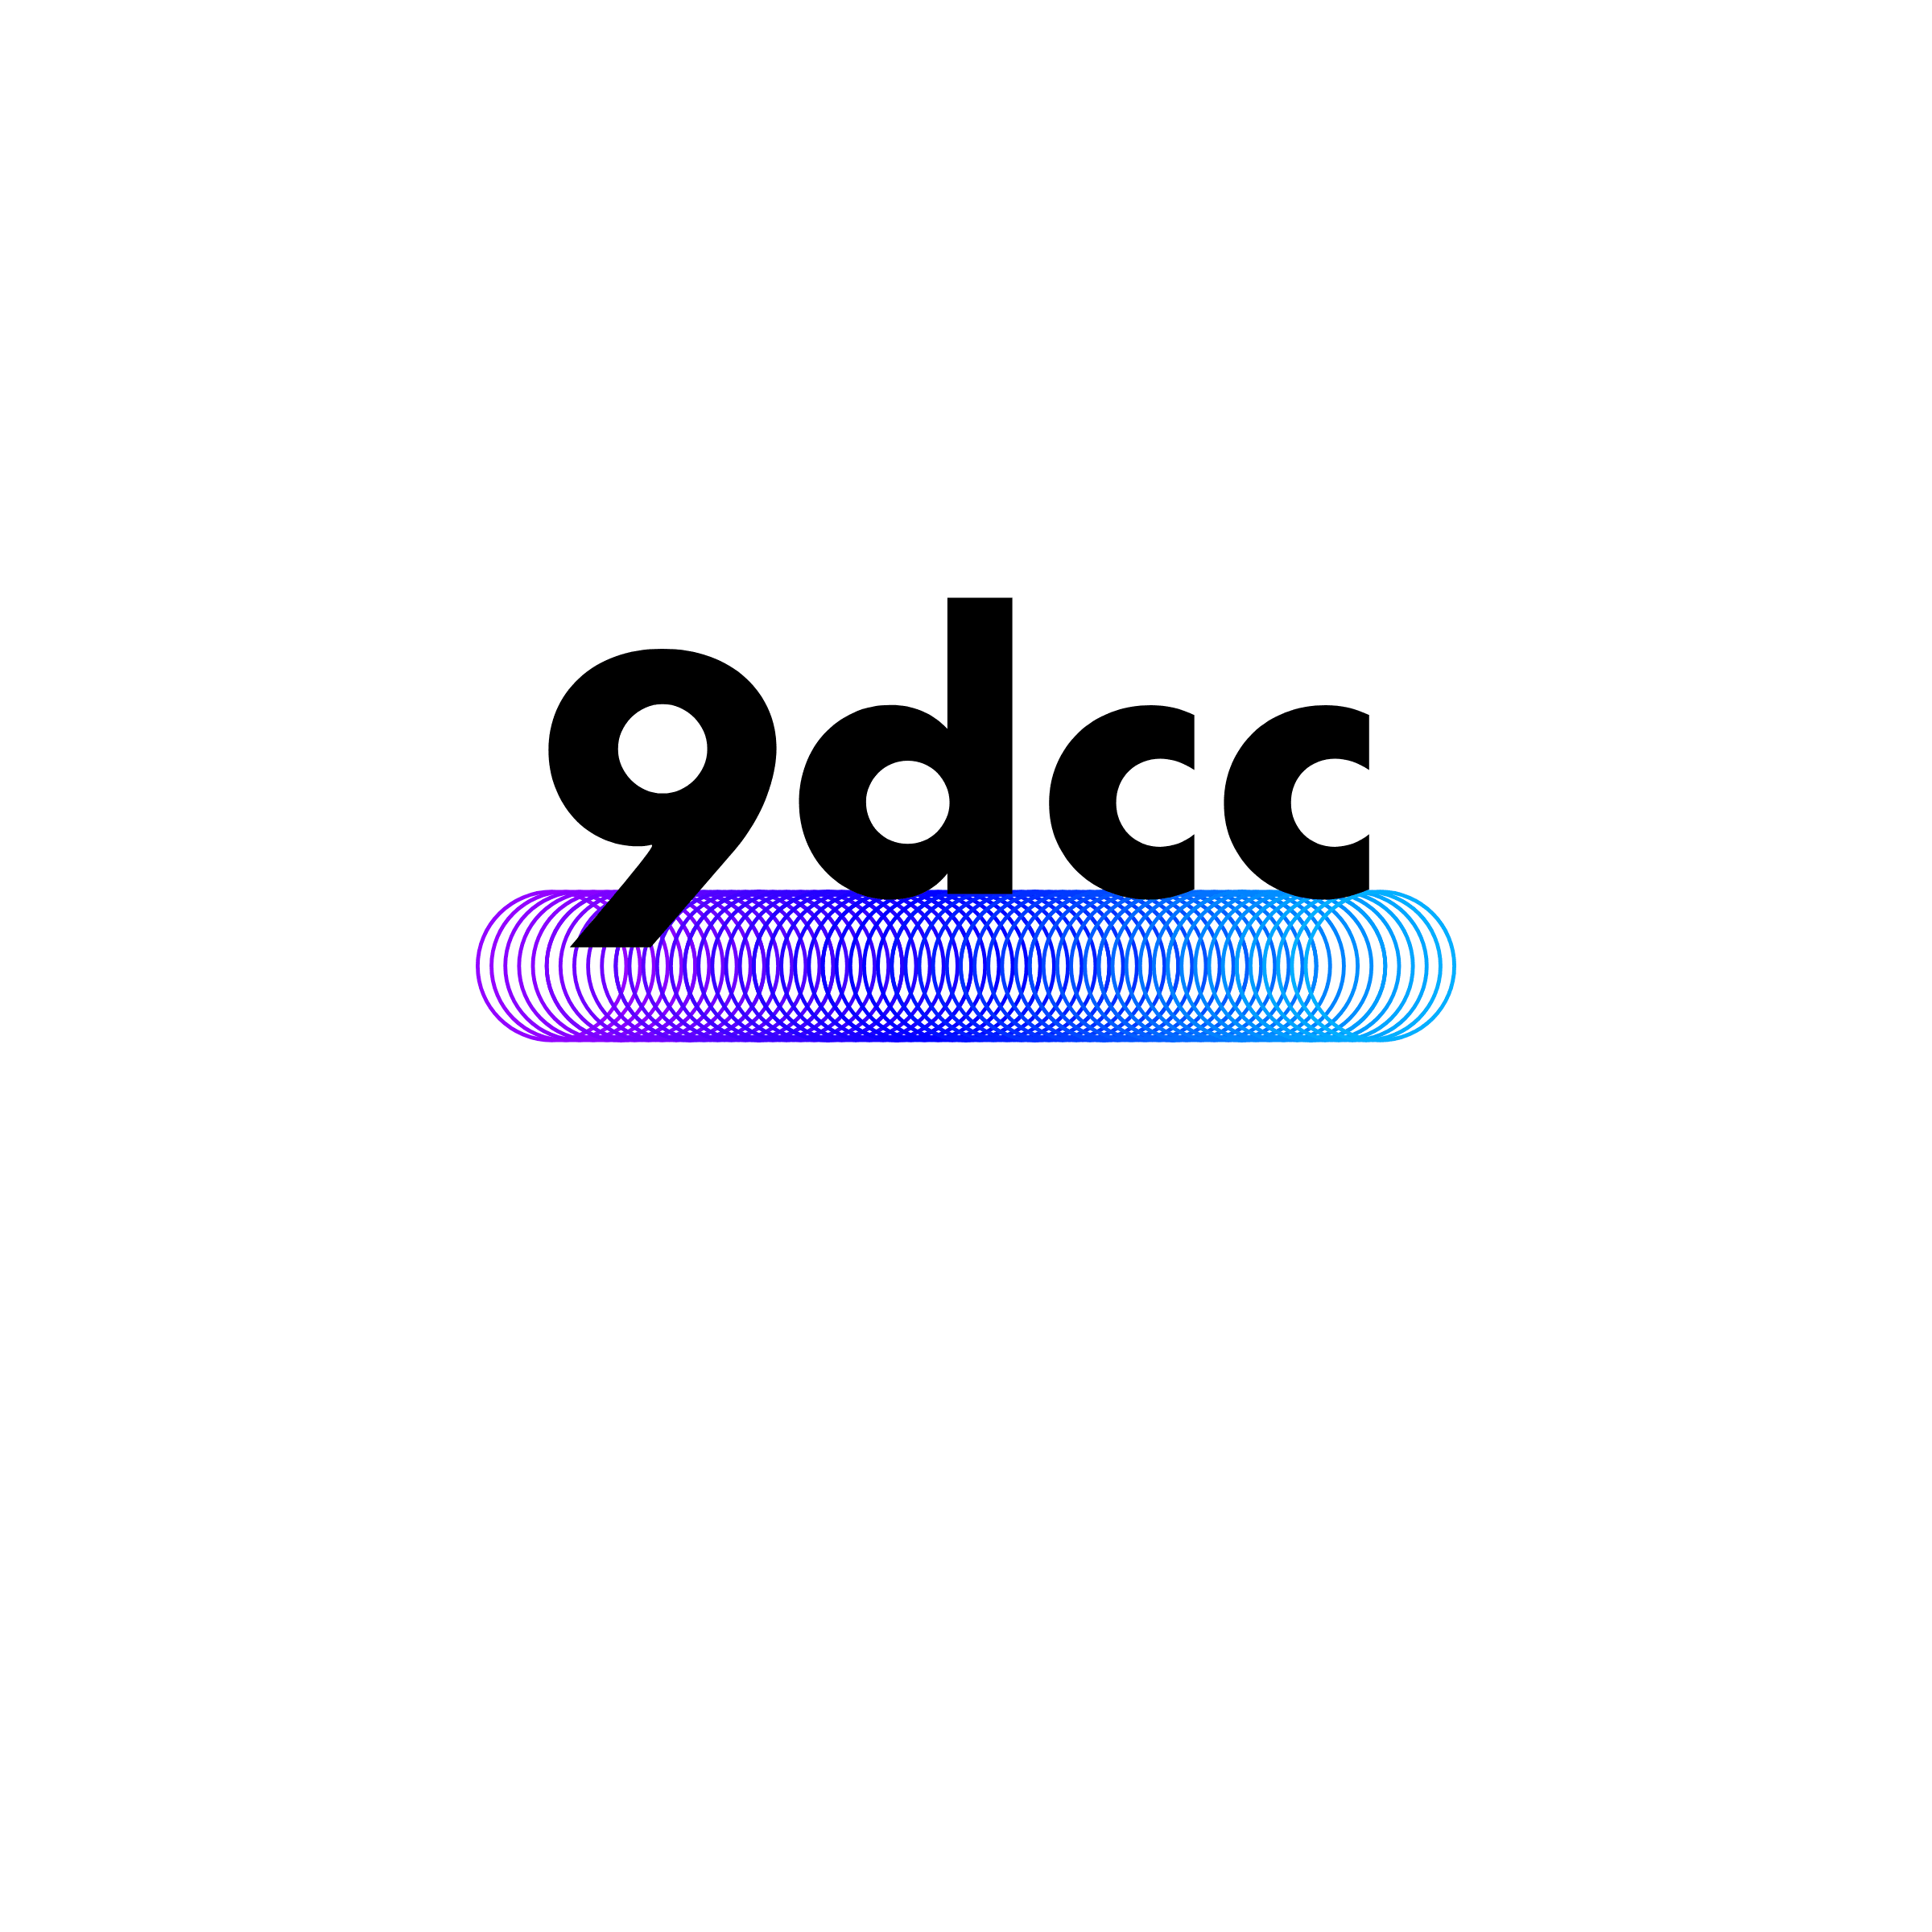 9dcc ITERATION-02 #295